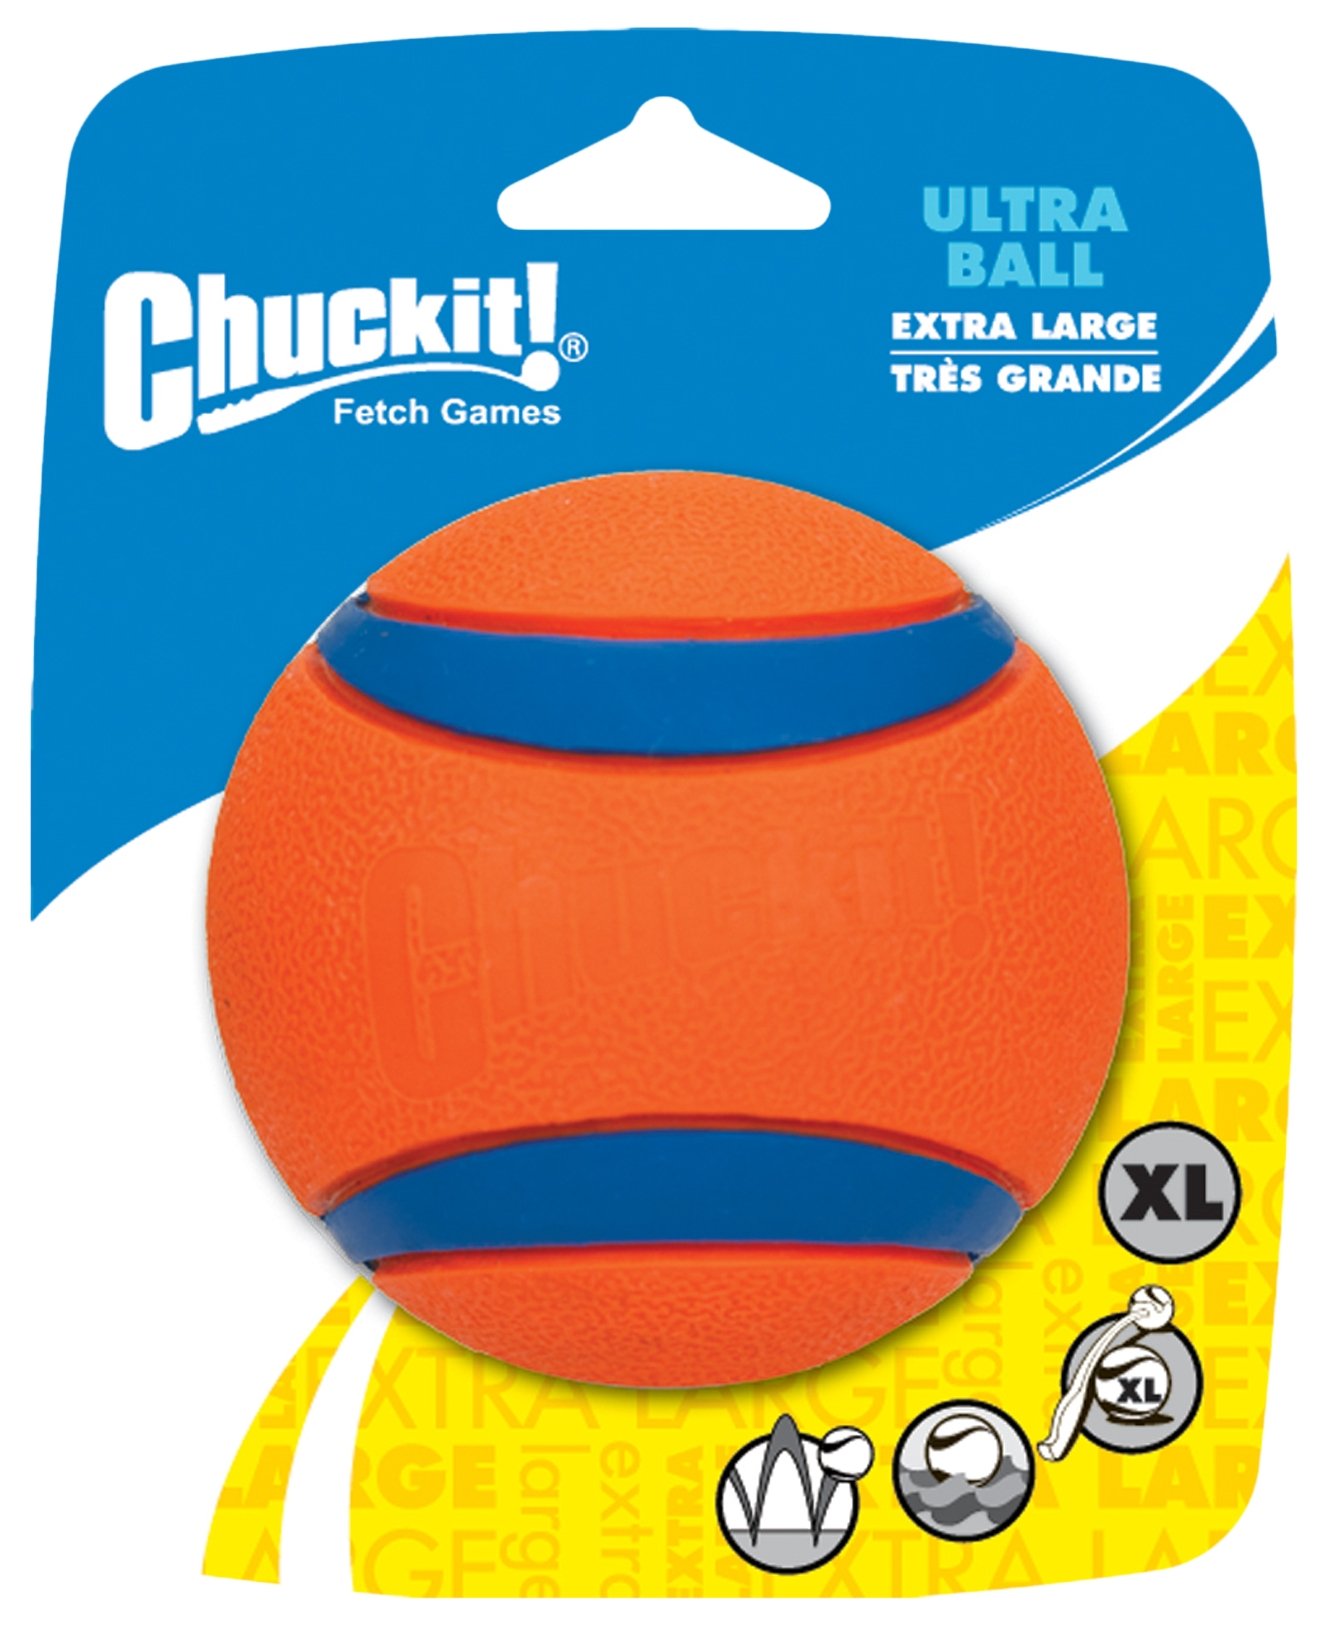 E-shop Chuckit Ultra Ball XL 1ks